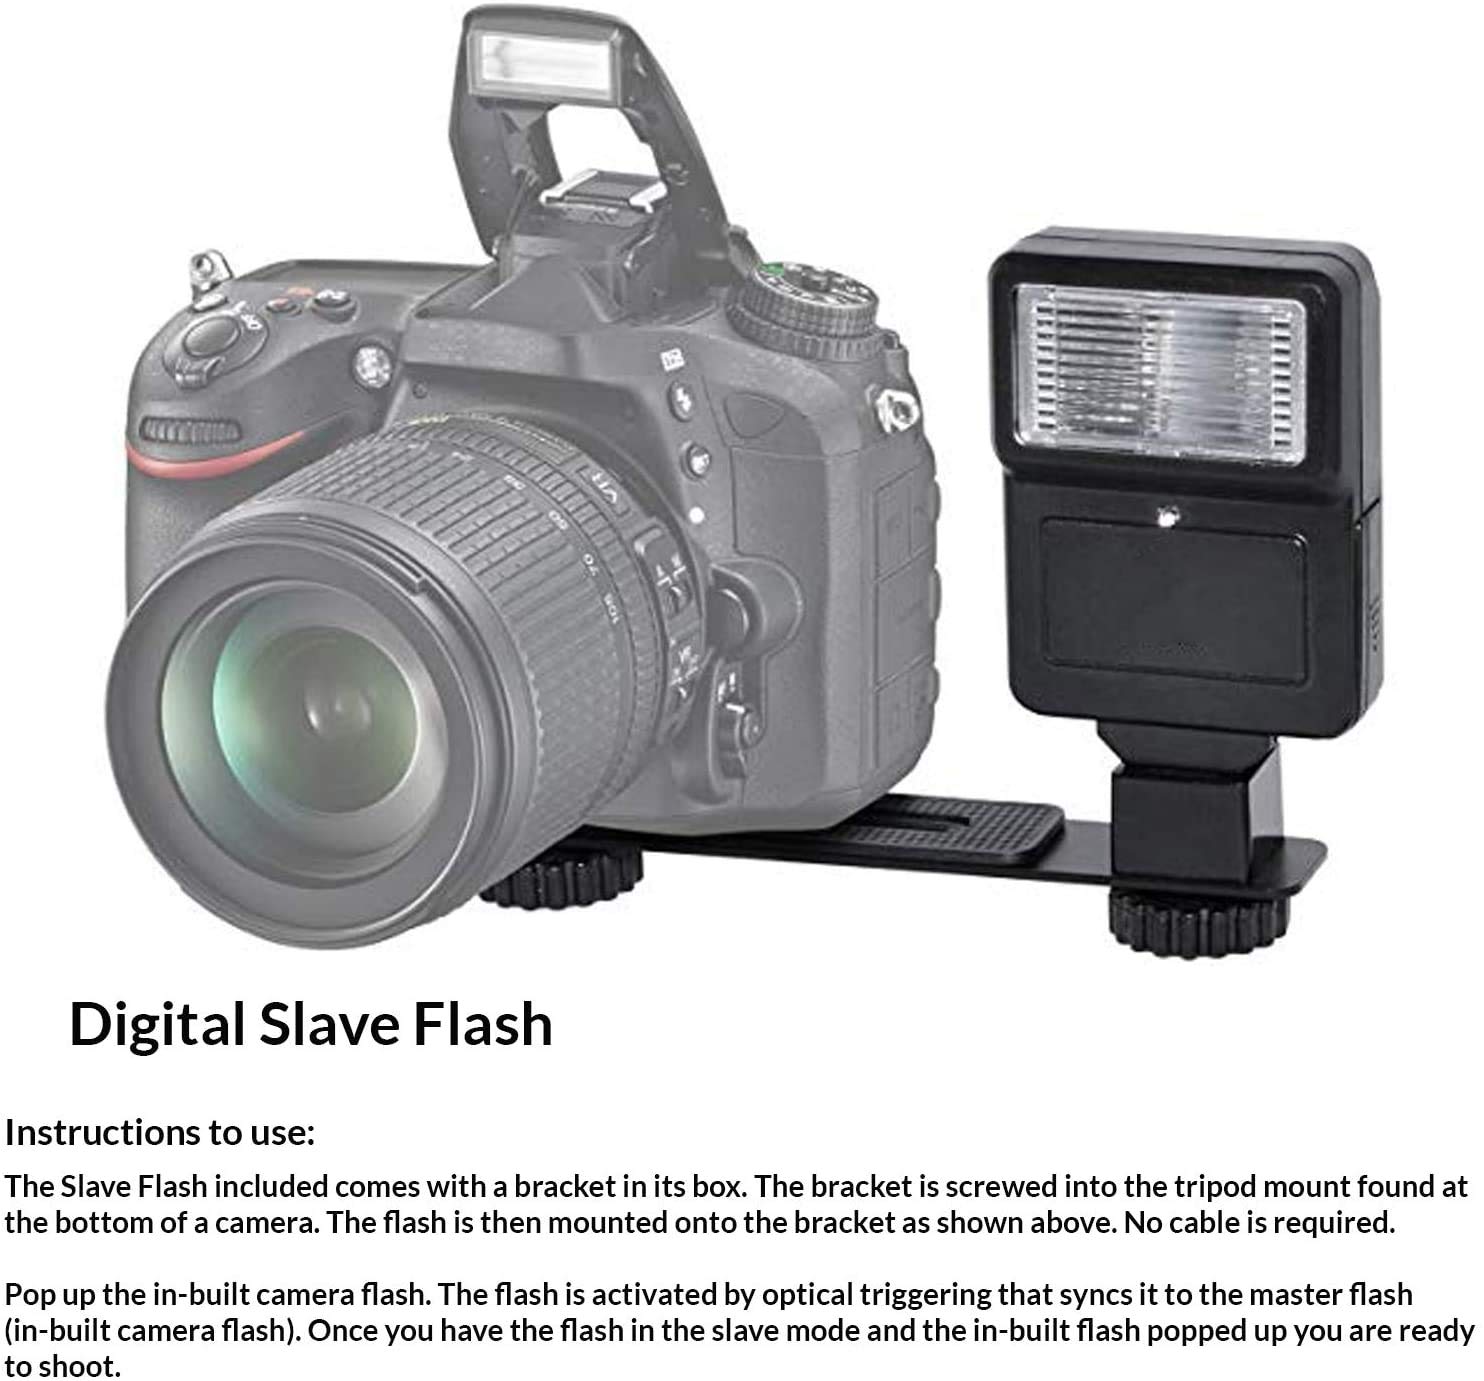 Canon EOS M50 Mark II Mirrorless Digital SLR with 15-45mm Lens (Black) + 420-800mm Super Zoom Lens, Wide Angle Lens, Telephoto Lens, 64GB Memory Card, 3pc Filter Kit, Tripod, Card Reader + Pro Bundle